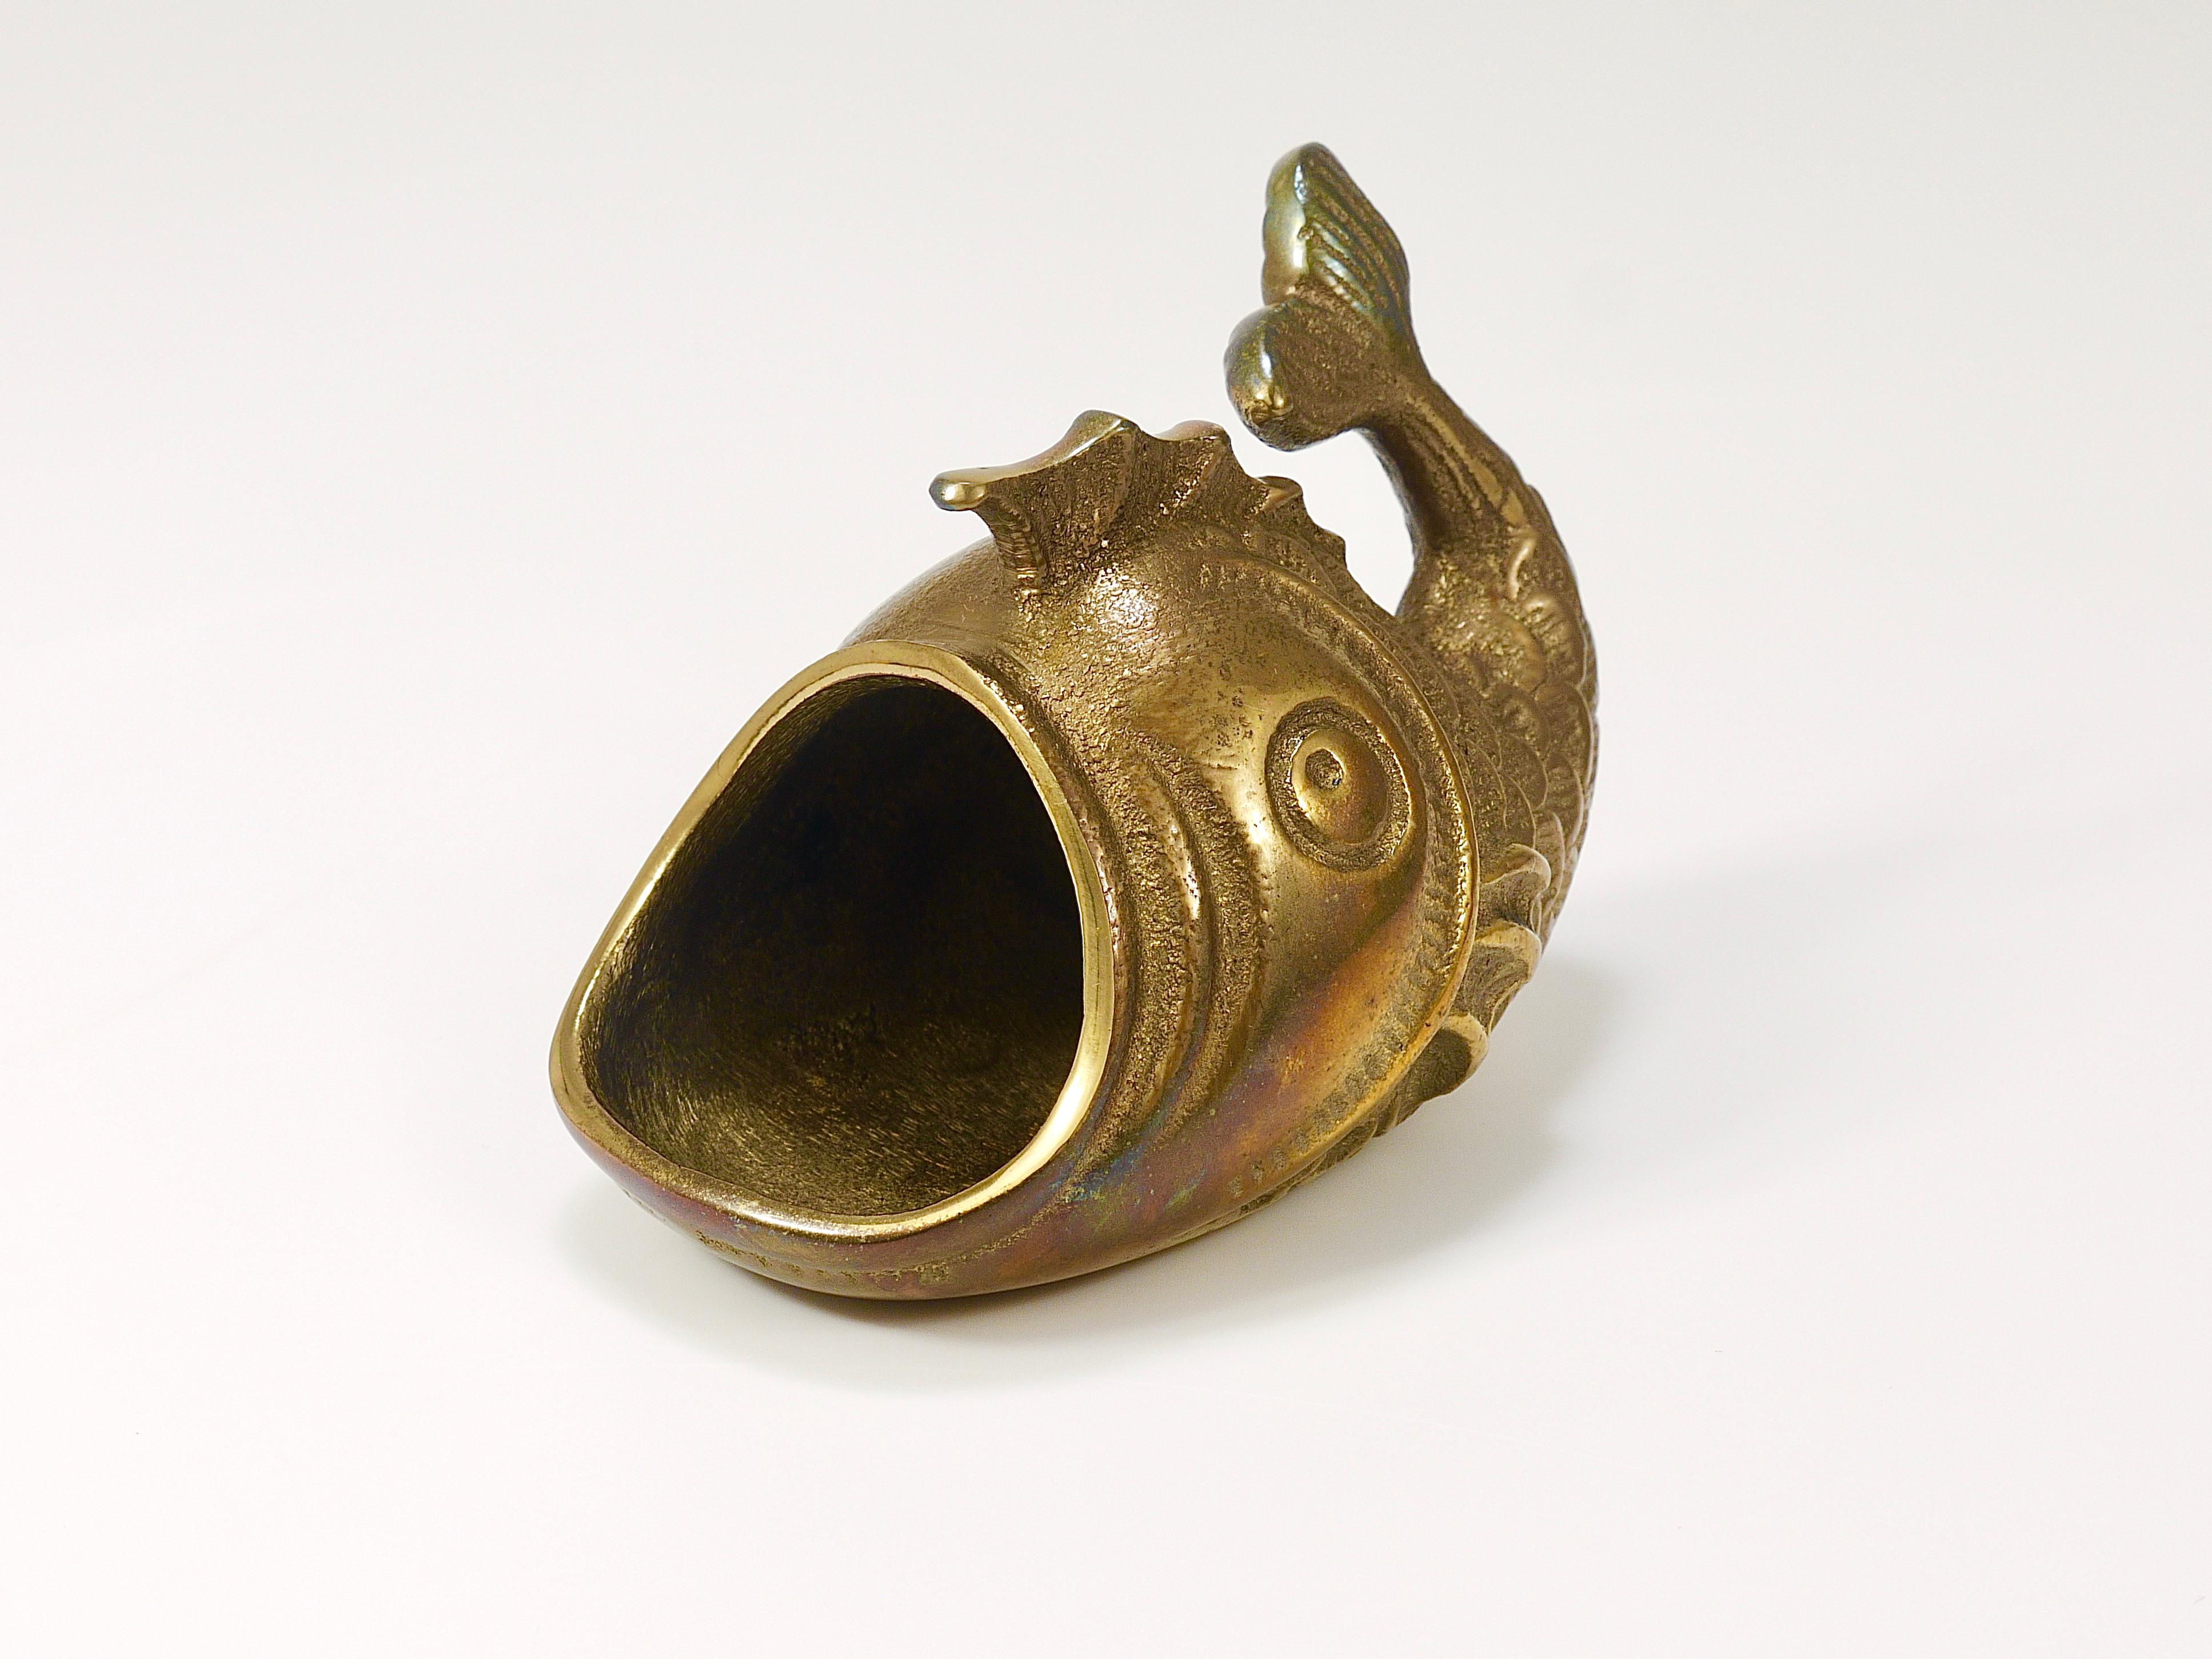 Walter Bosse Midcentury Fish Sculpture Brass Ashtray, Austria, 1950s For Sale 8